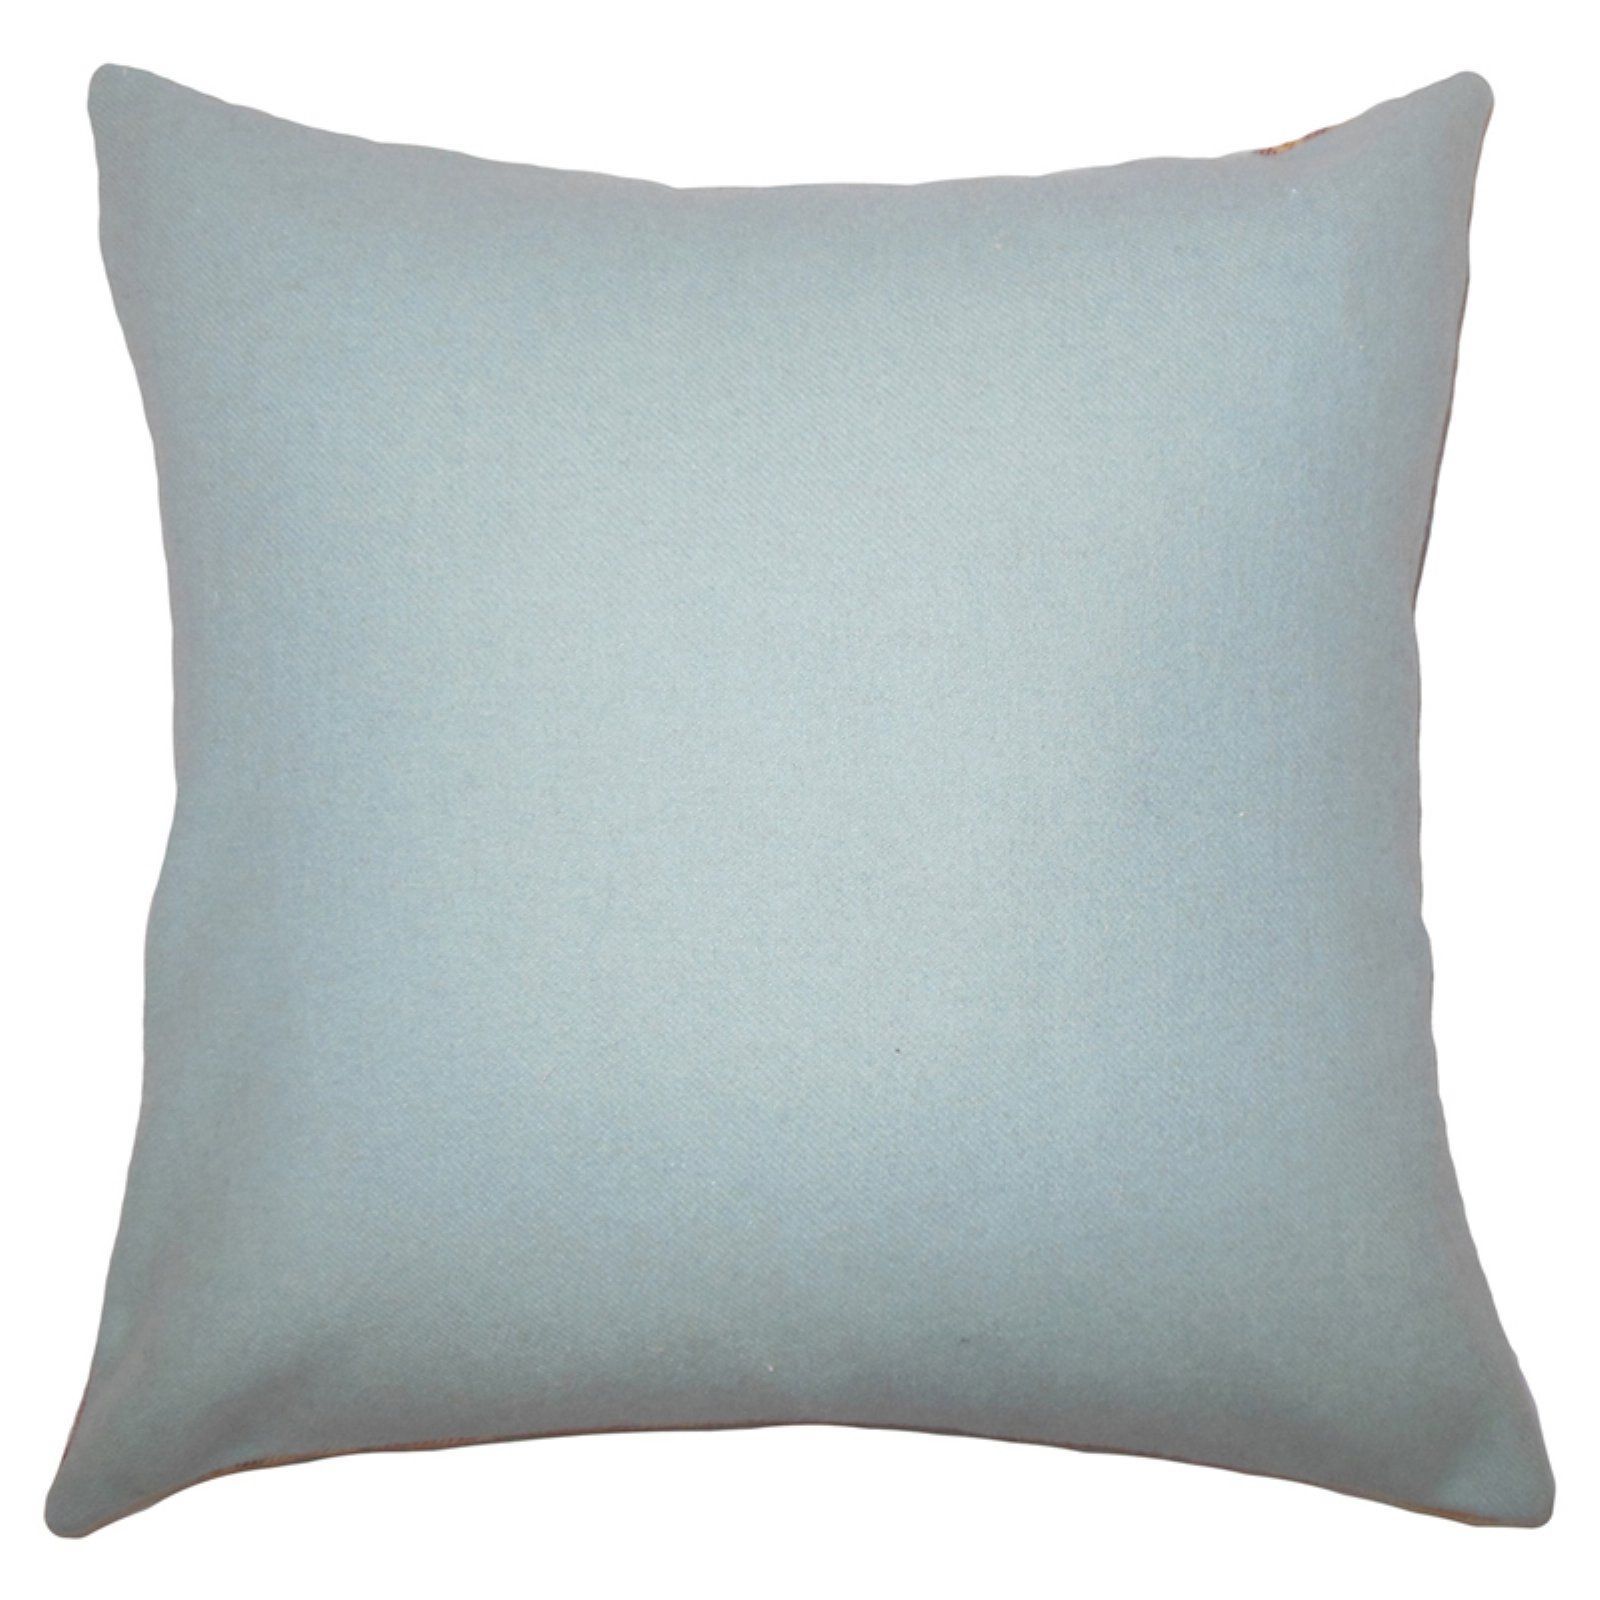 Pillow Collection Solid Square Decorative Pillow Light Blue -   22 decor pillows with trim
 ideas